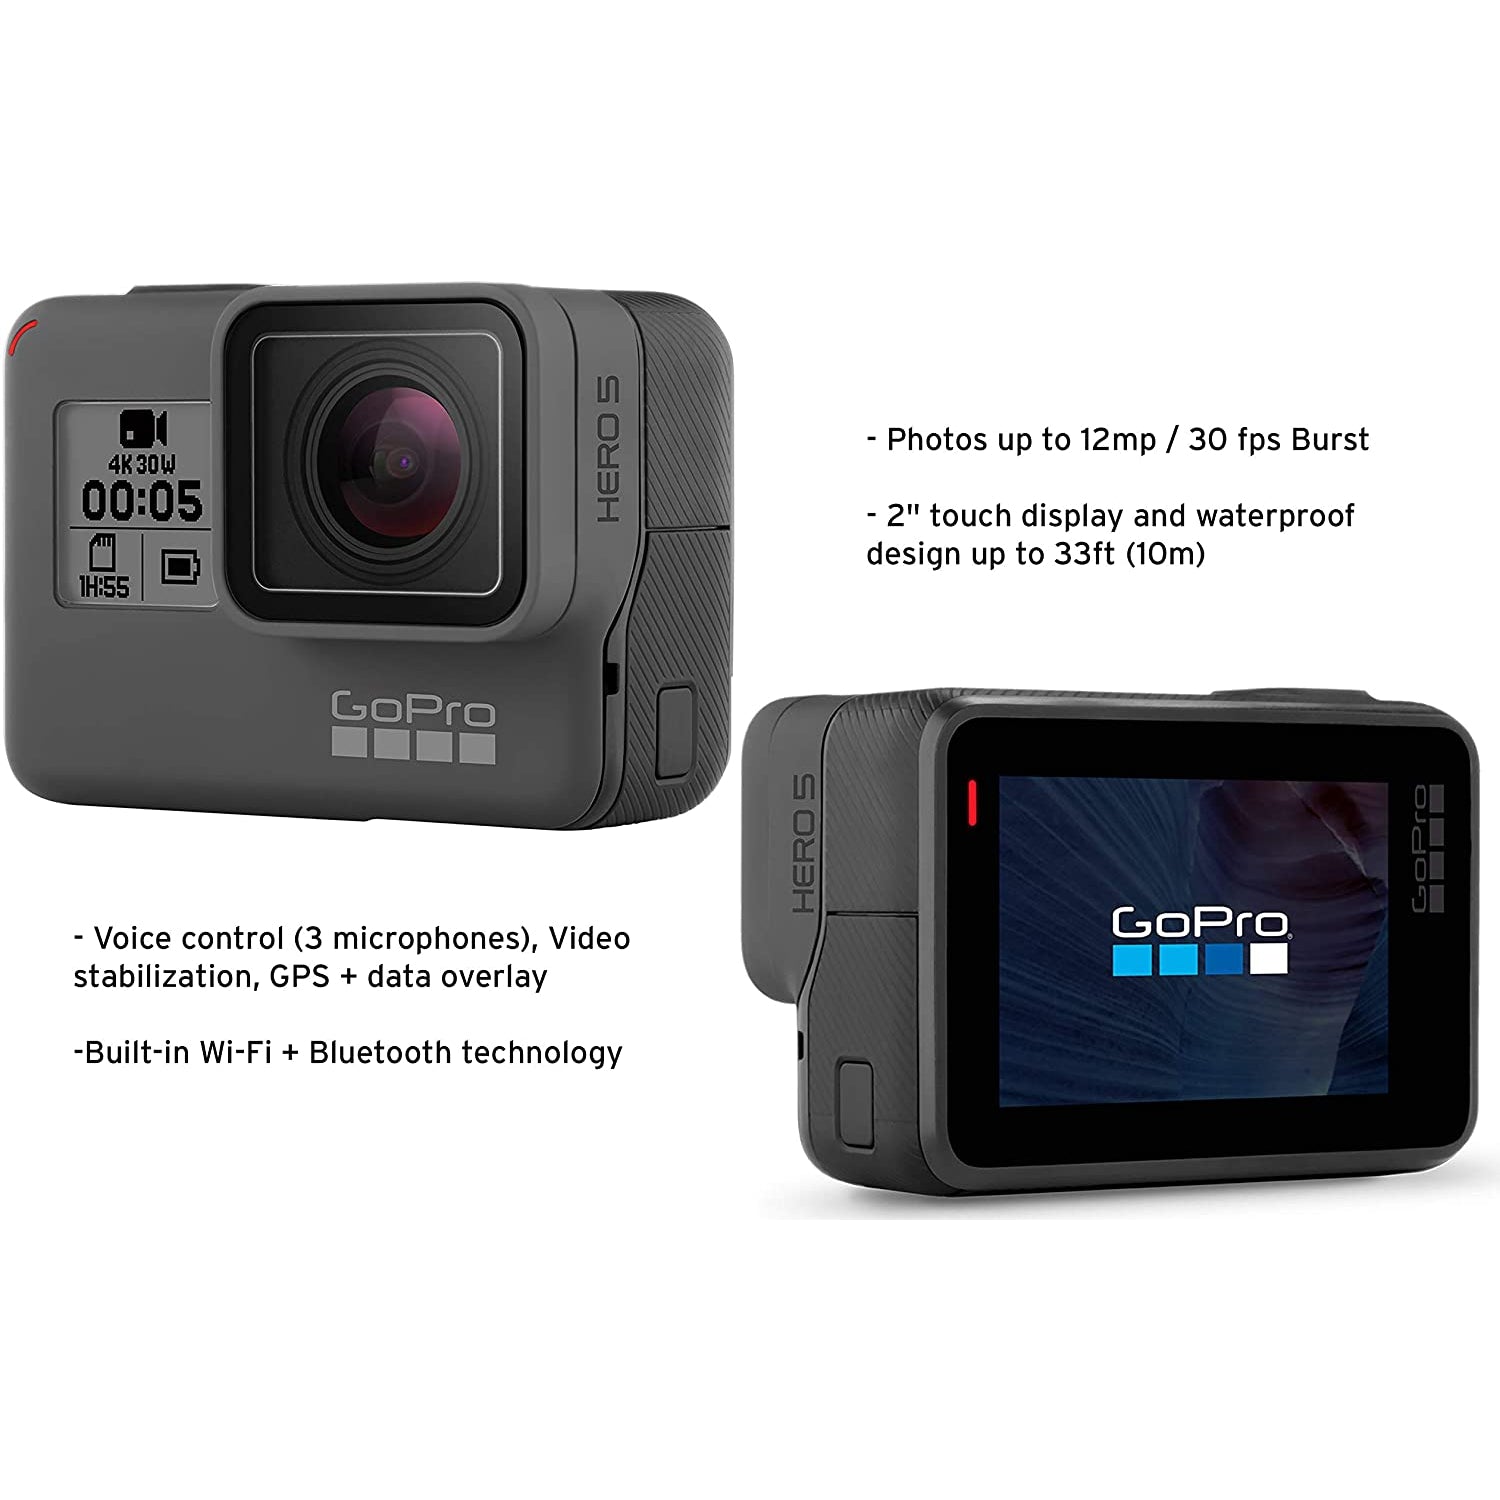 GoPro Hero5 Action Camera - Black